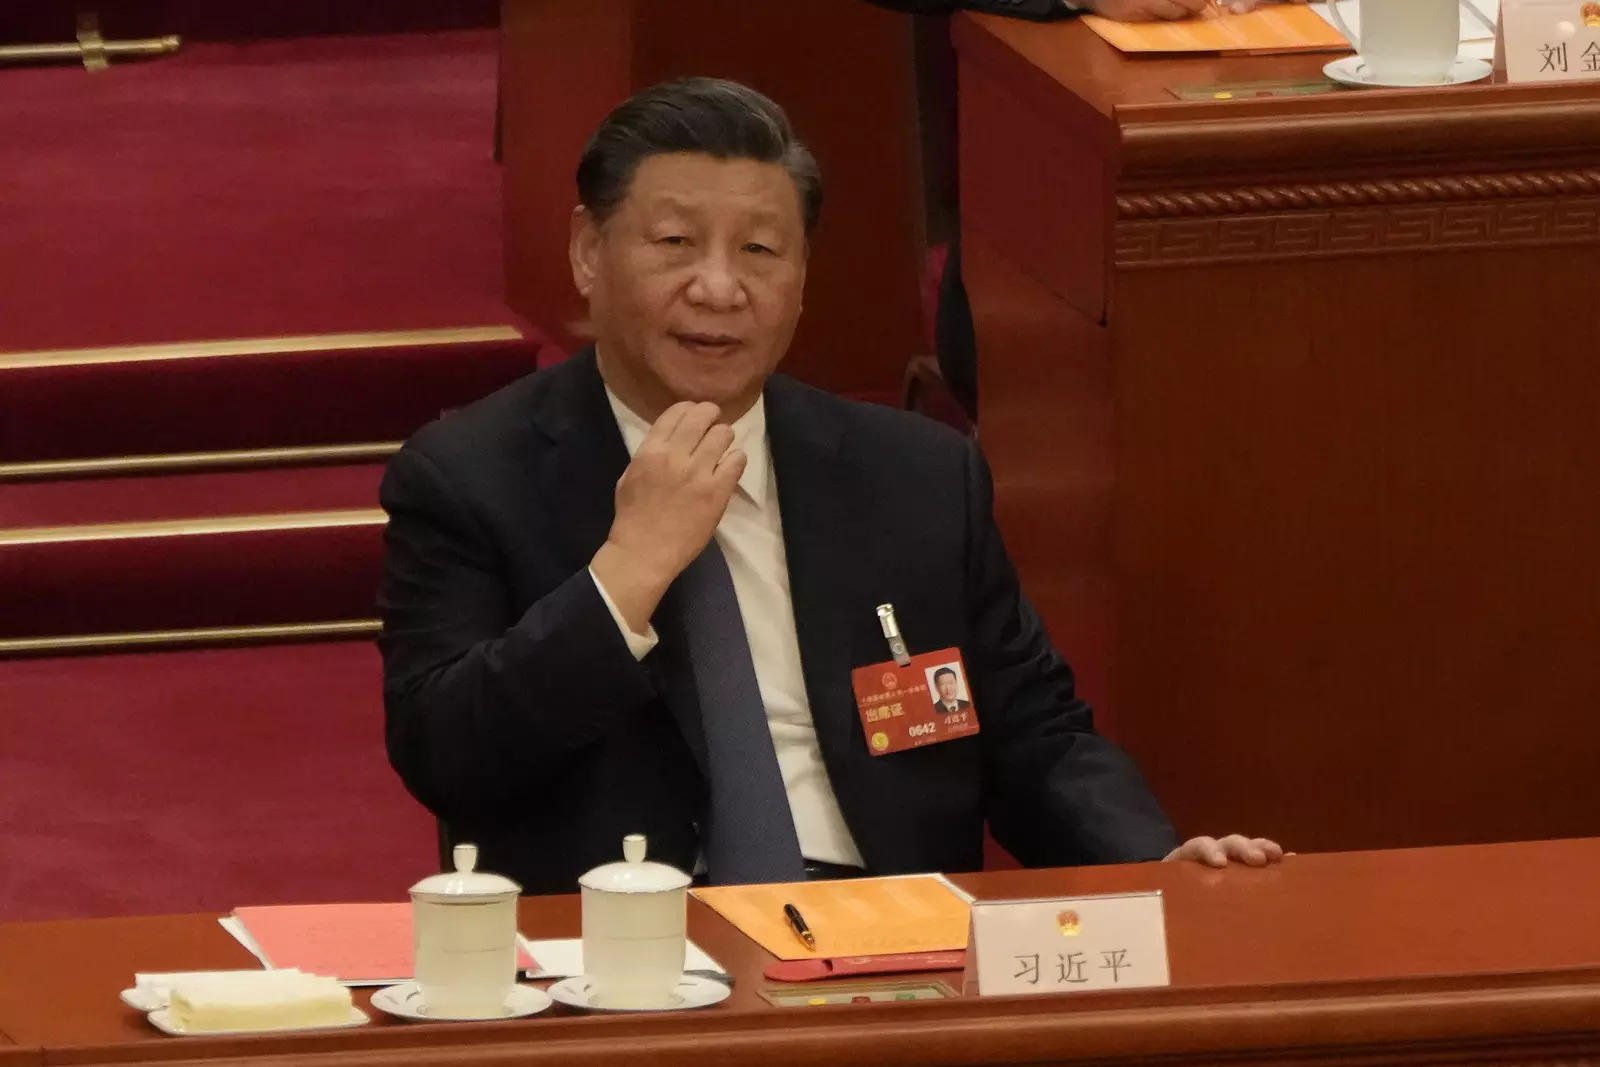 Xi Jinping: Xi Jinping: China must oppose pro-Taiwan independent forces